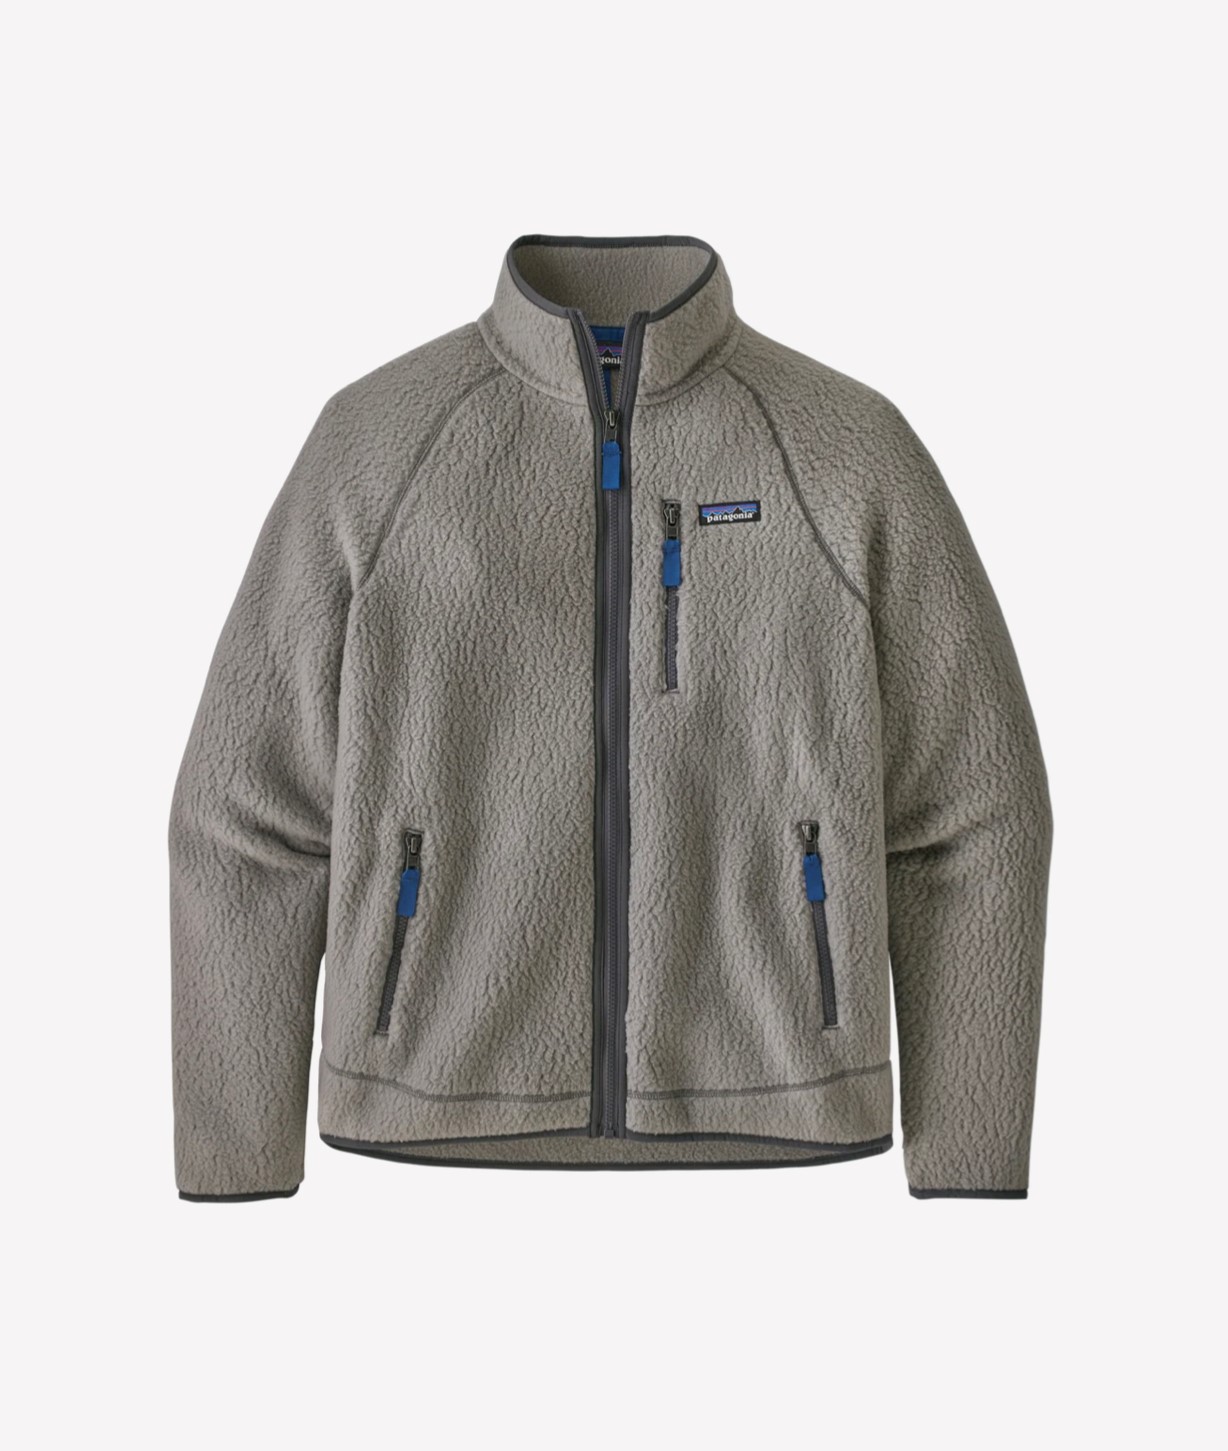 Patagonia M's Retro Pile Fleece Jacket - Feather Grey - Medium